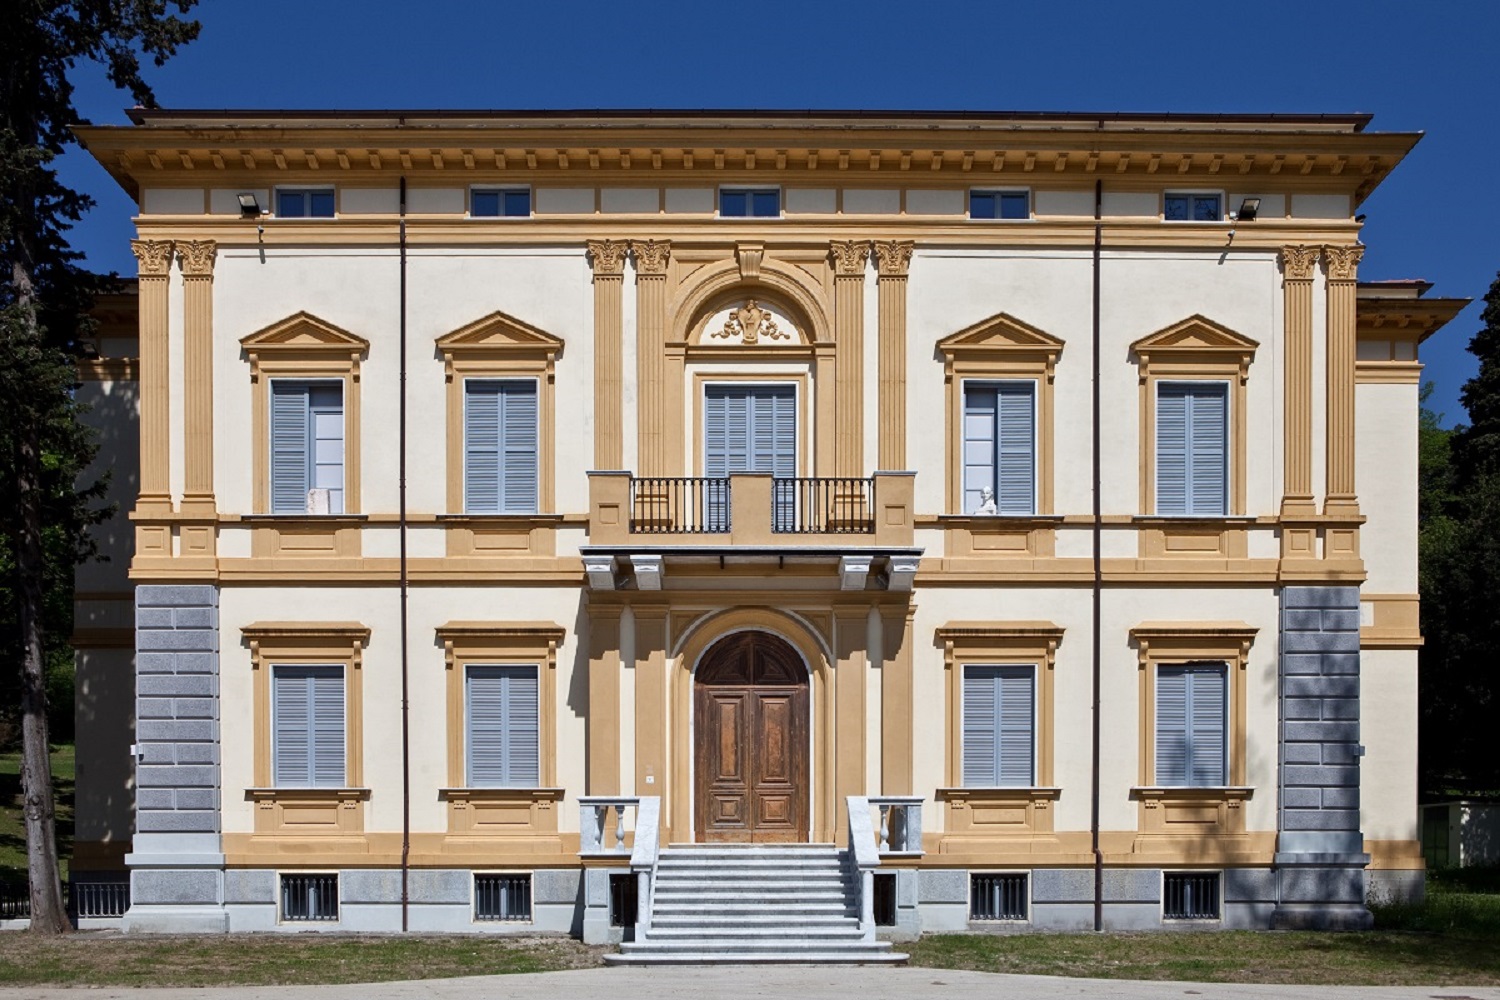 Villa Fabbricotti a Carrara